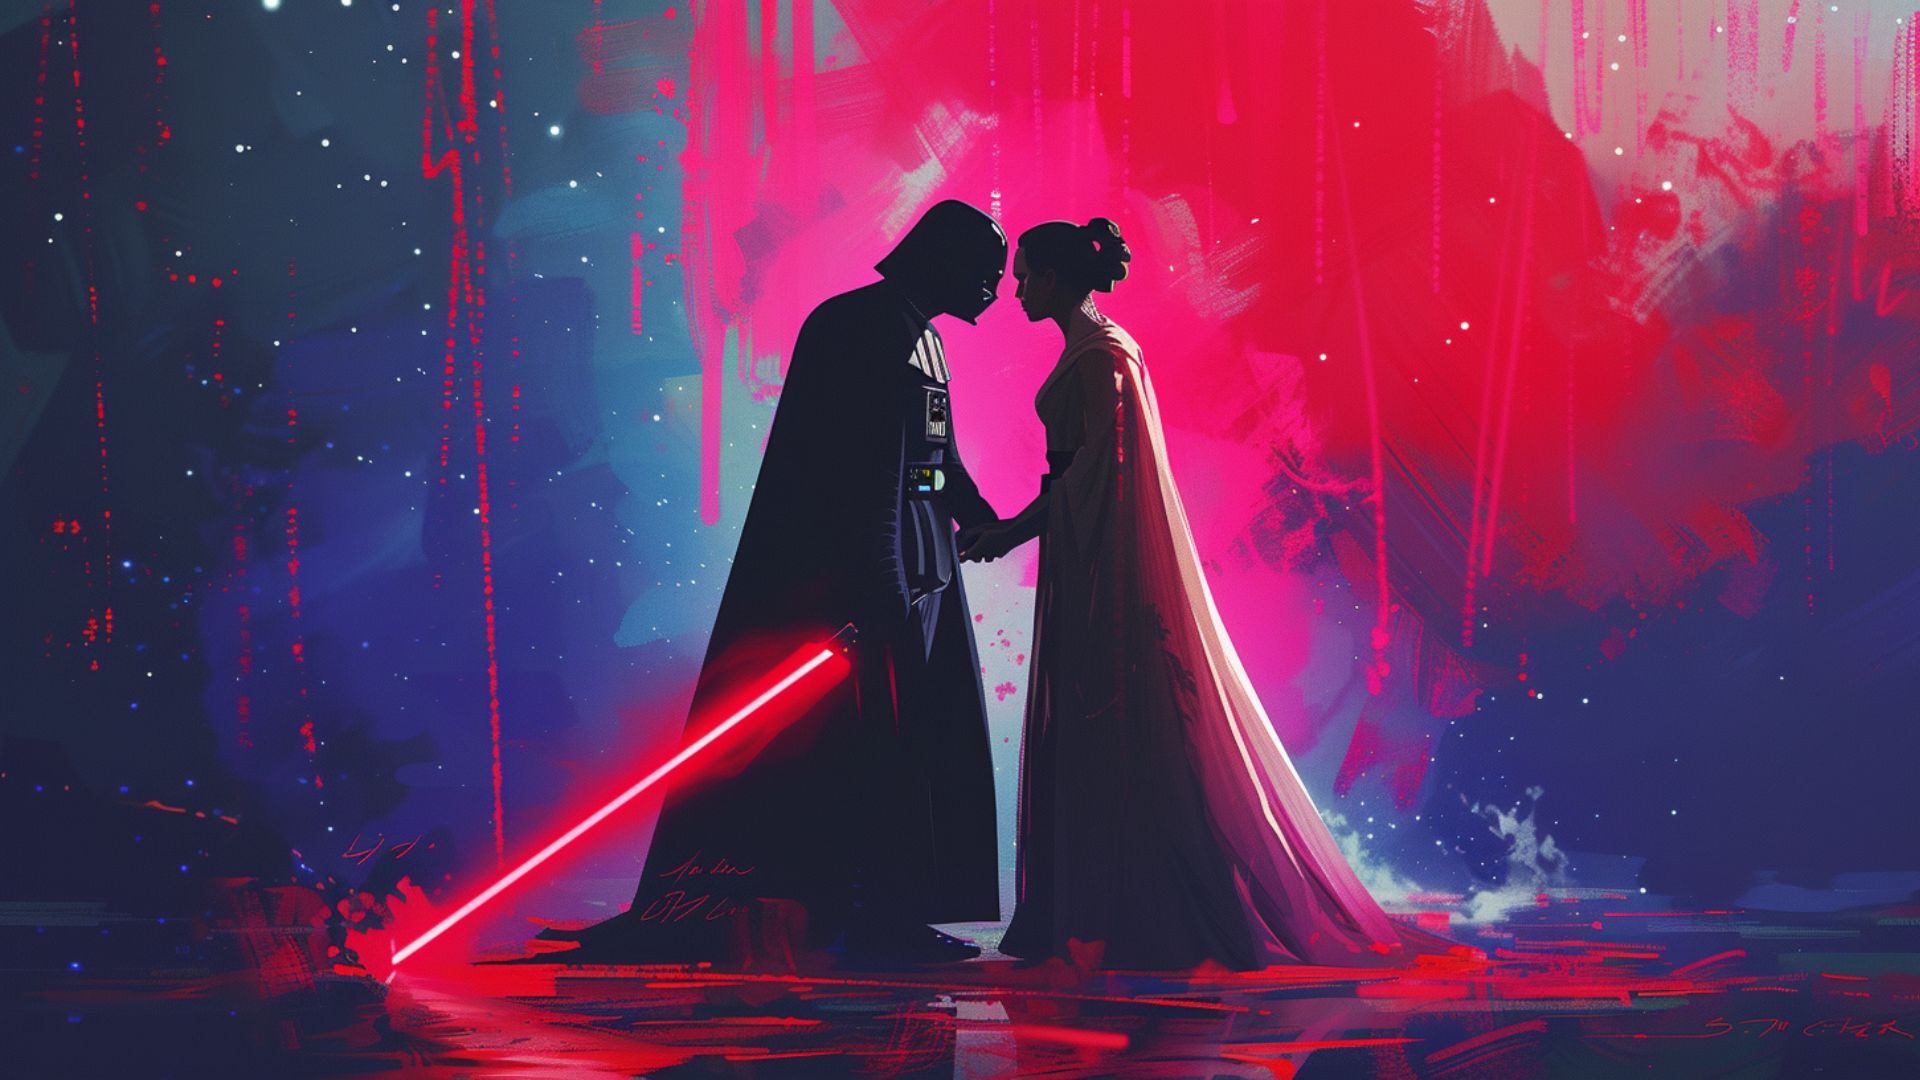 Darth Vader and Padme